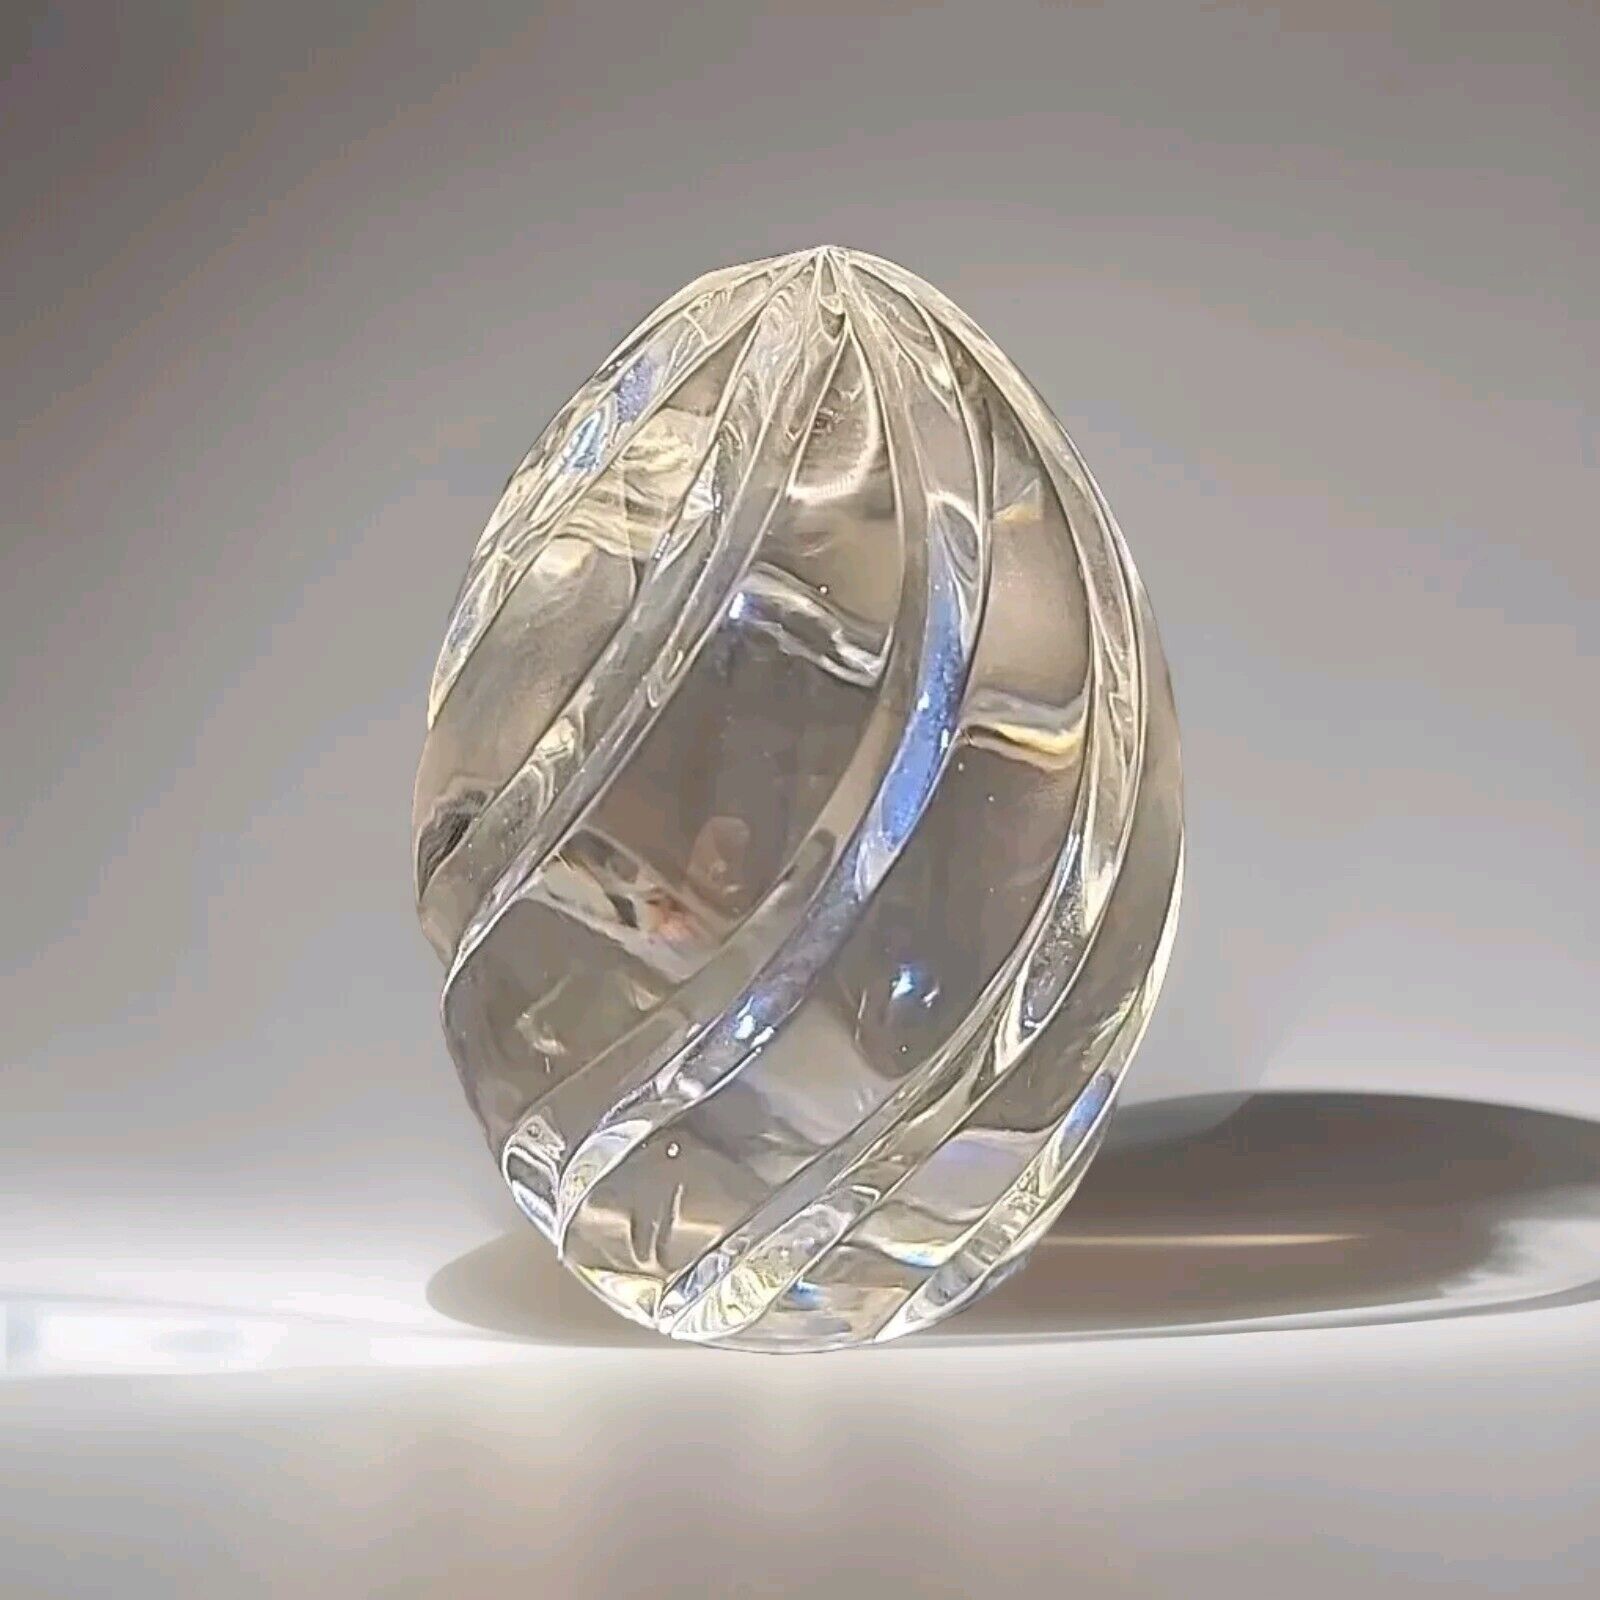 Dansk International Designs Solid Lead Crystal Egg w/ Swirls Paperweight 3.25 in